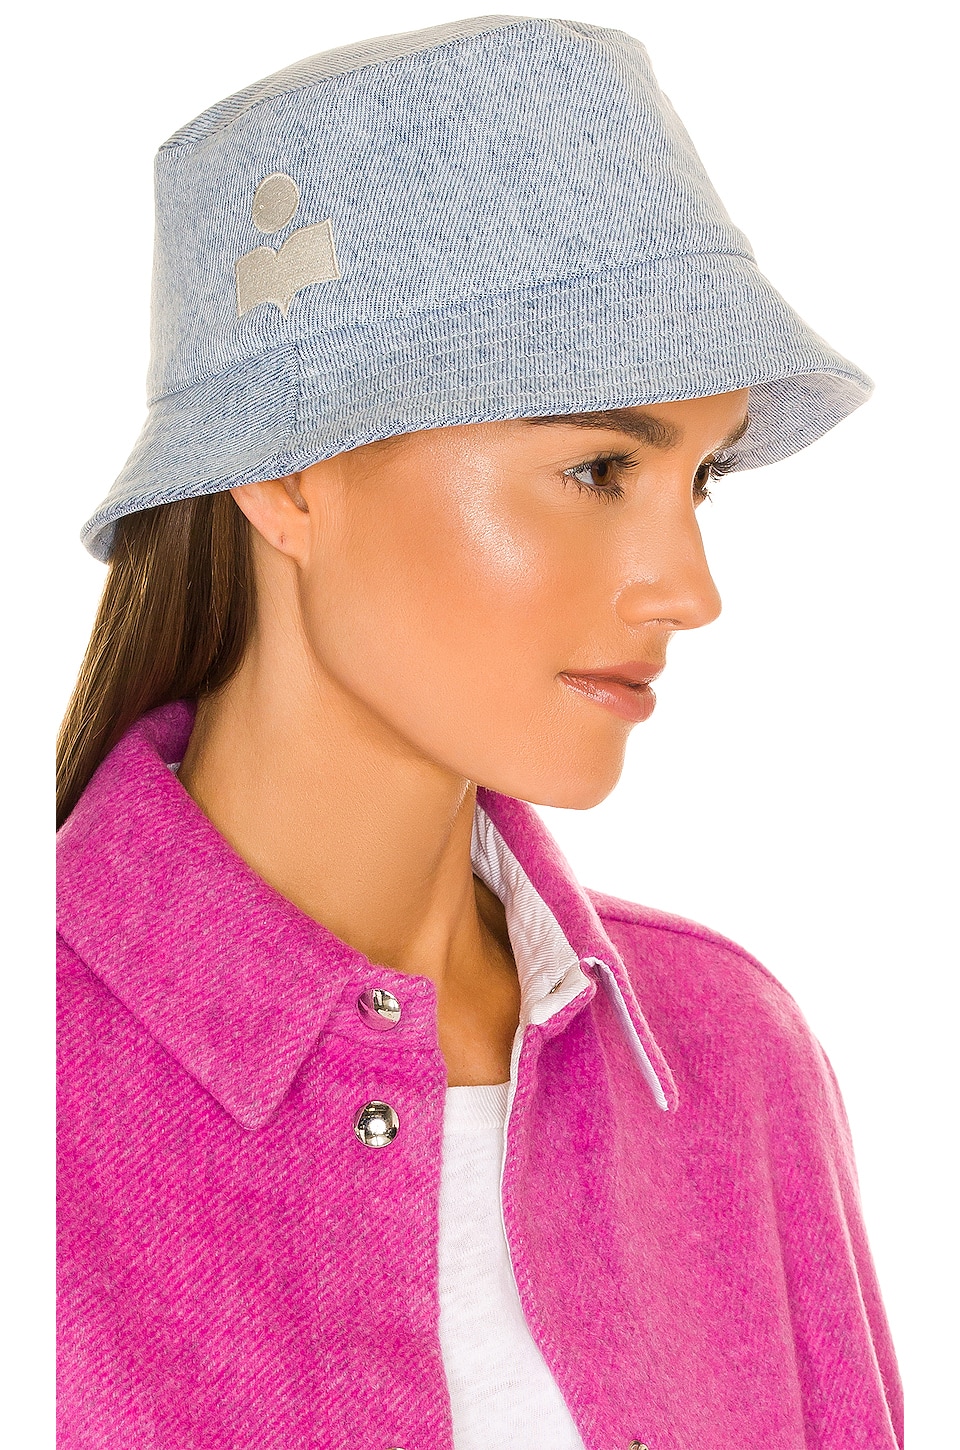 Isabel Marant Haley Bucket Hat in Light Blue | REVOLVE